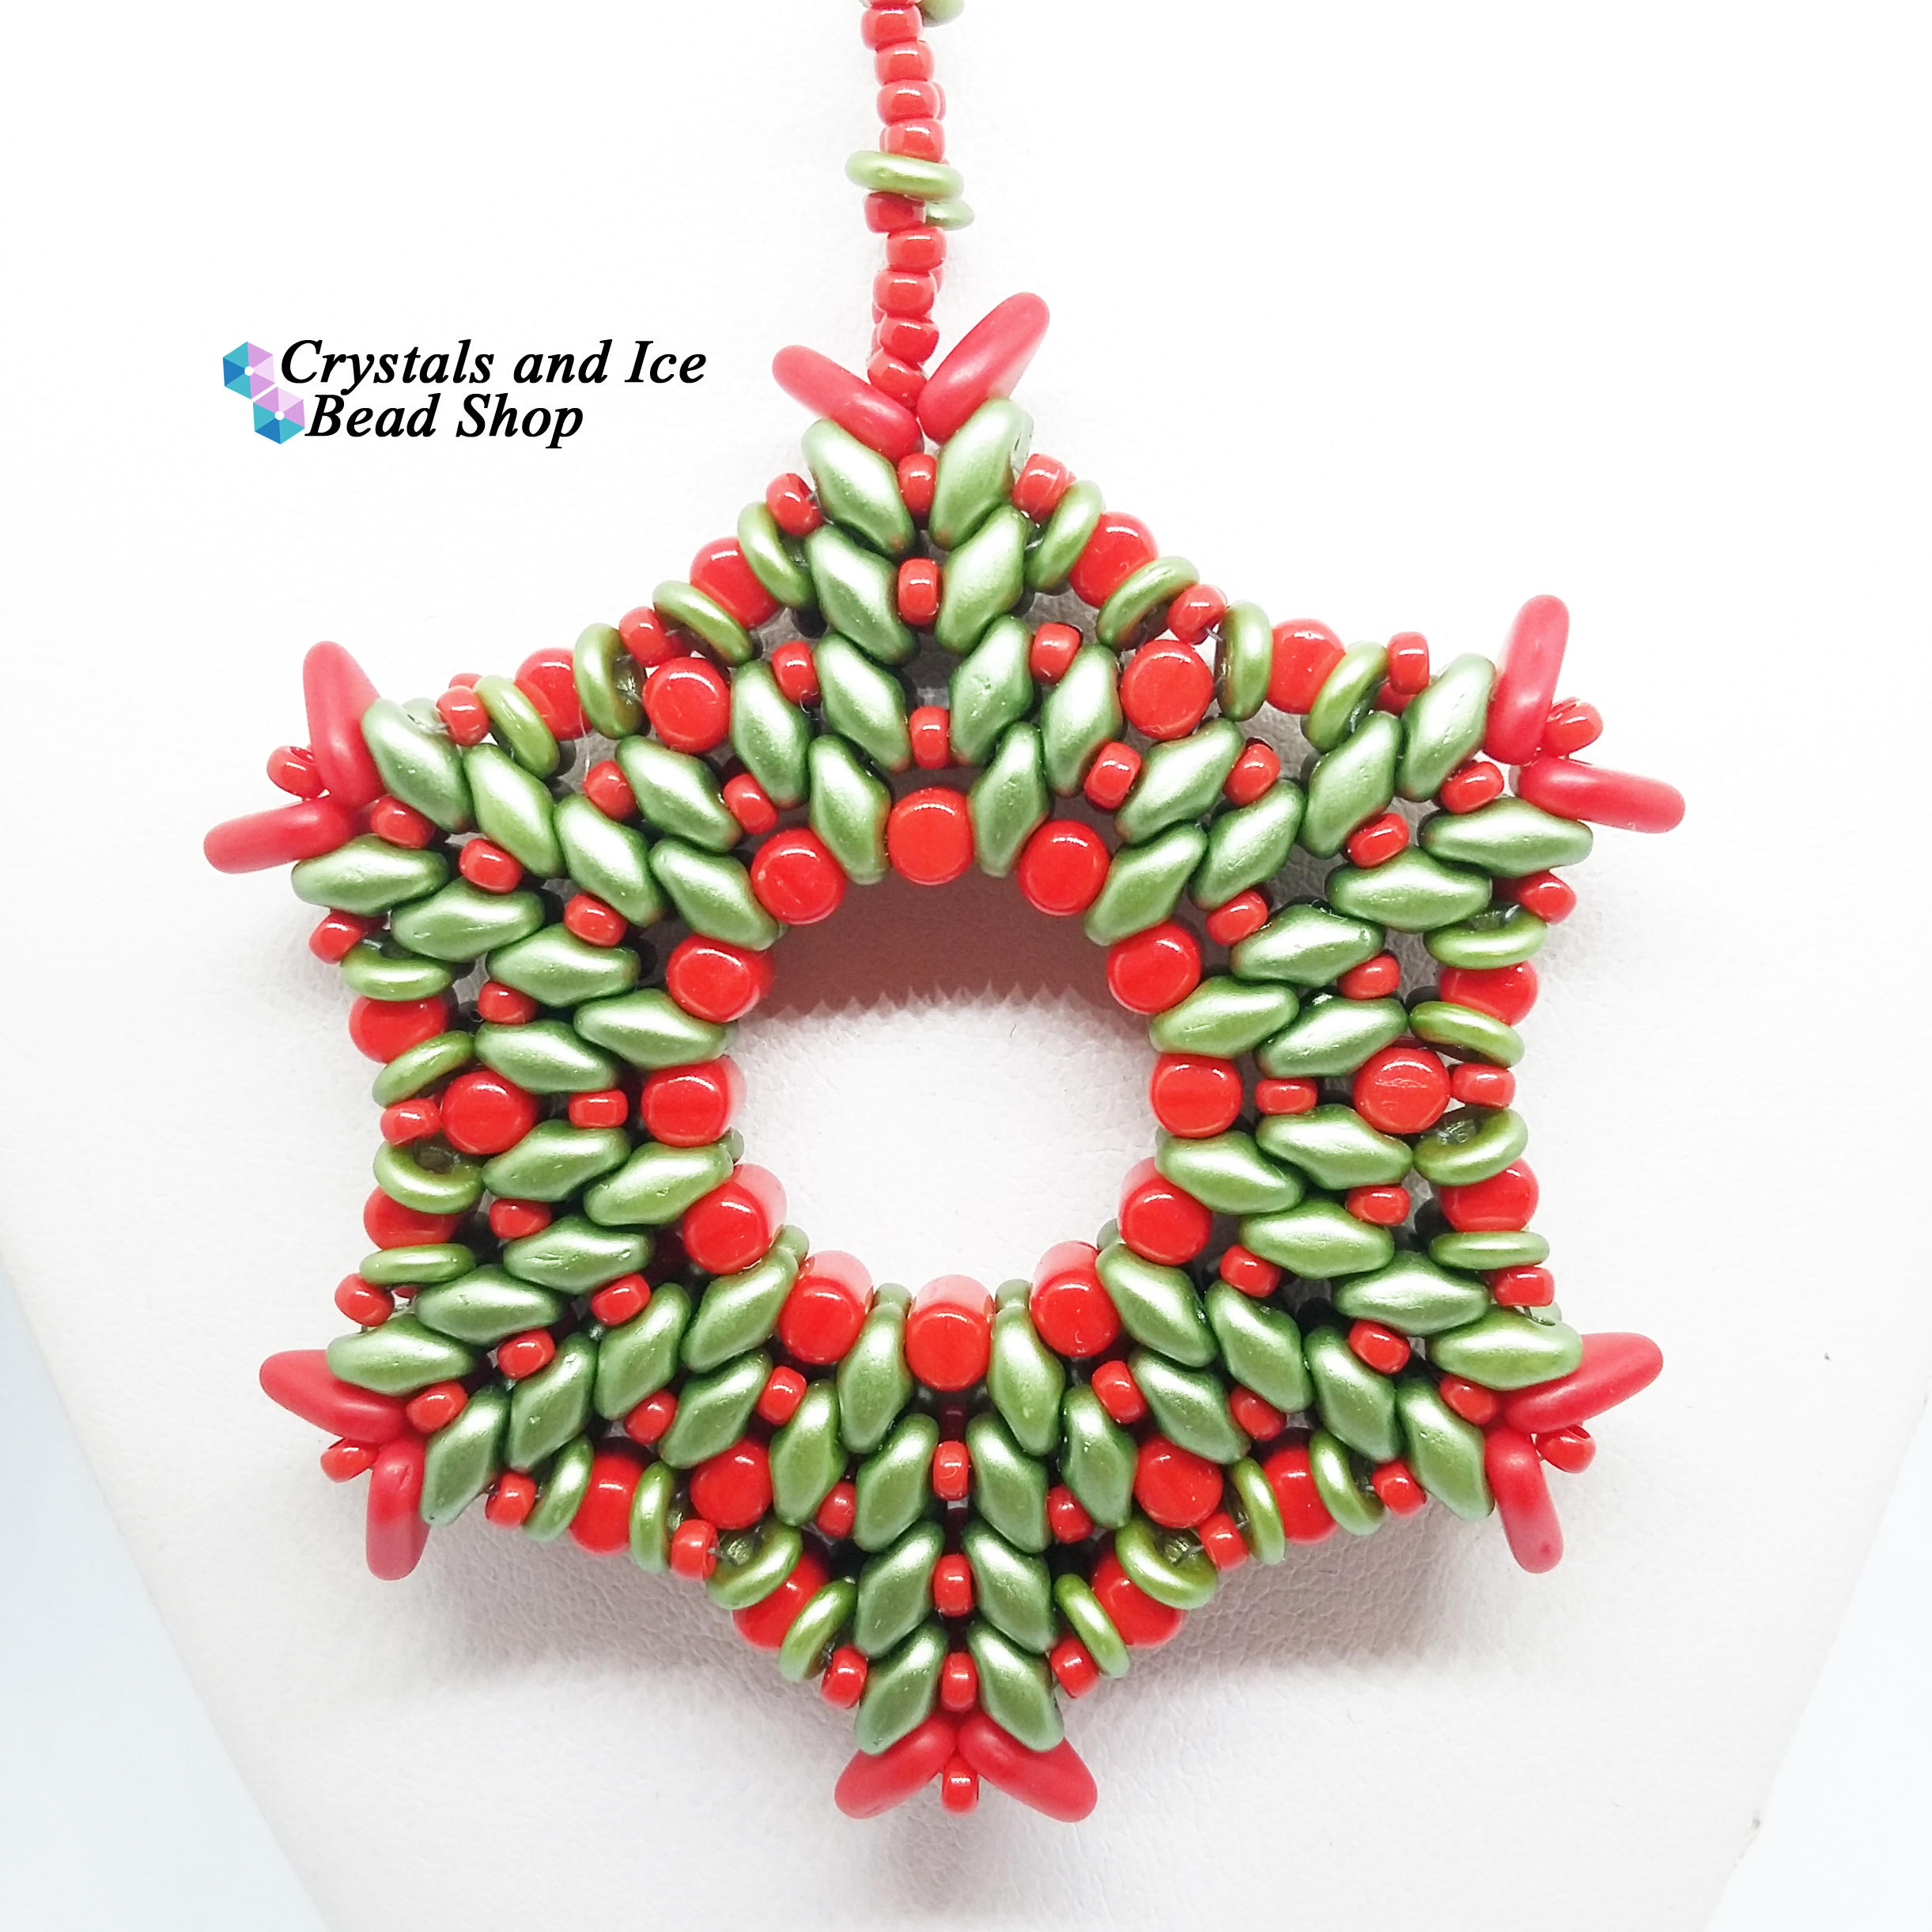 Christmas Star - Tree Ornament (Scandi)